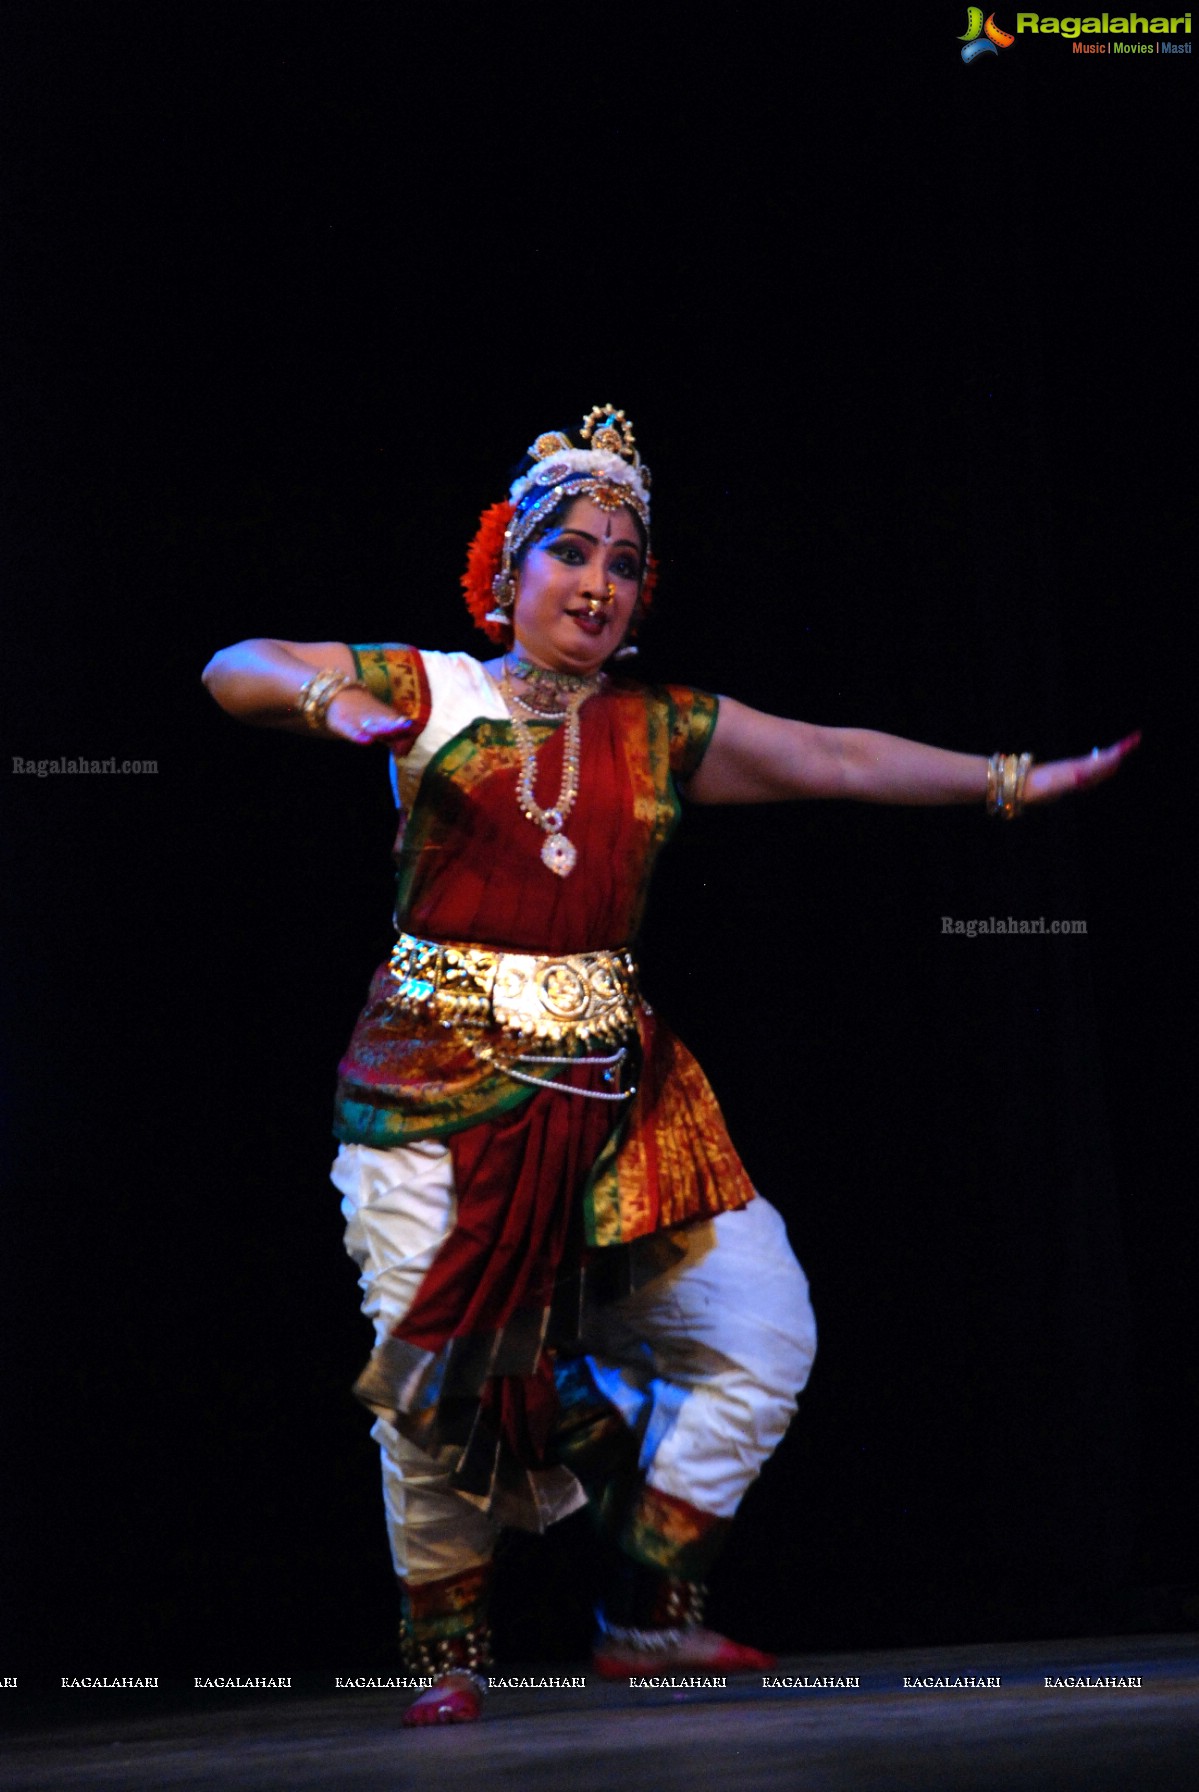 Desaraju Kiranmayi Kuchipudi Dance Performance at Ravindra Bharathi, Hyderabad